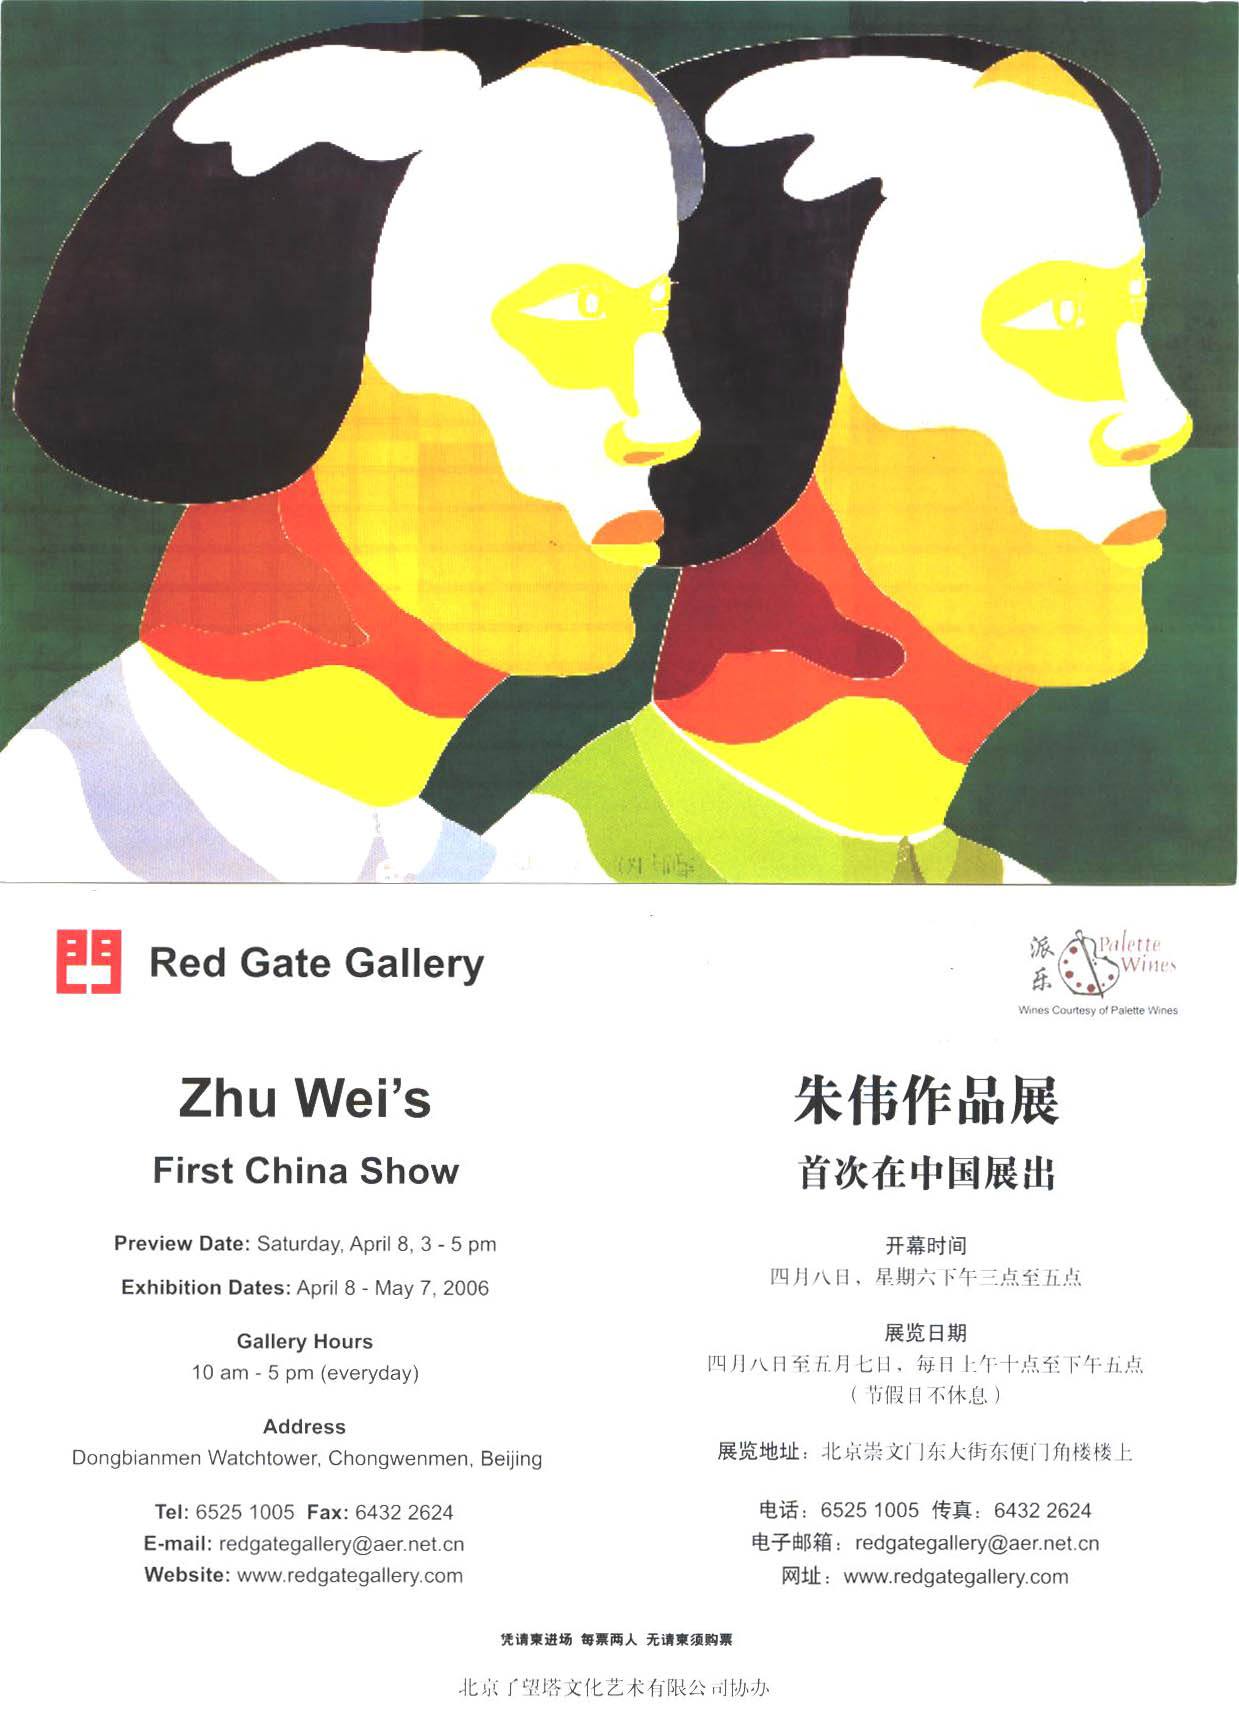 Invitation Card of the Exhibition